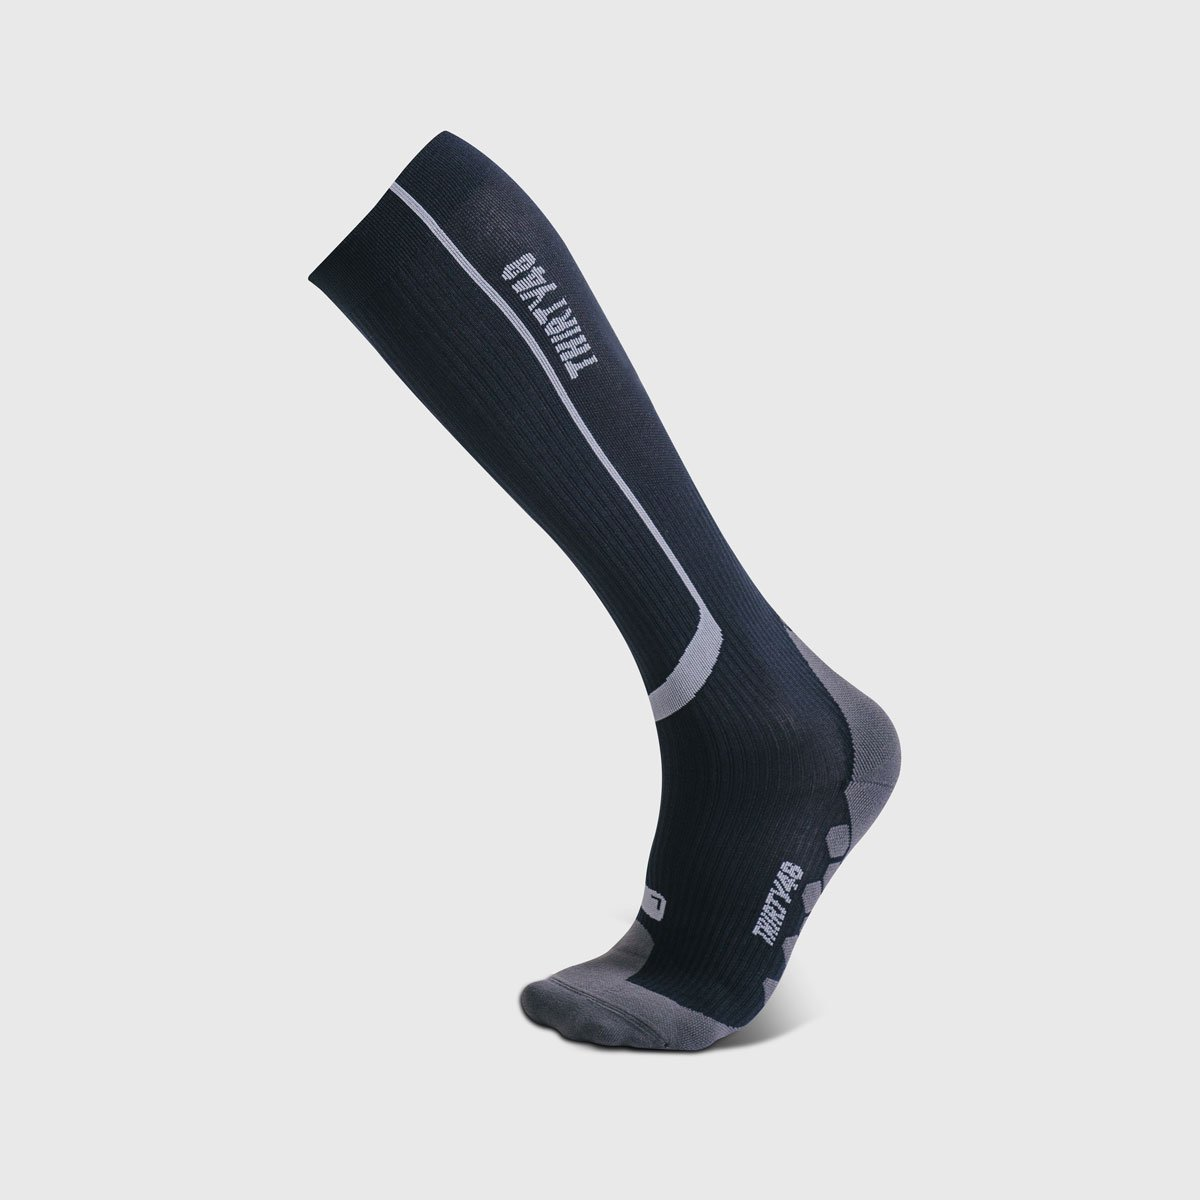 Thirty48-Elite-Compression-Socks-thicker-socks-thin-sock-crew-socks